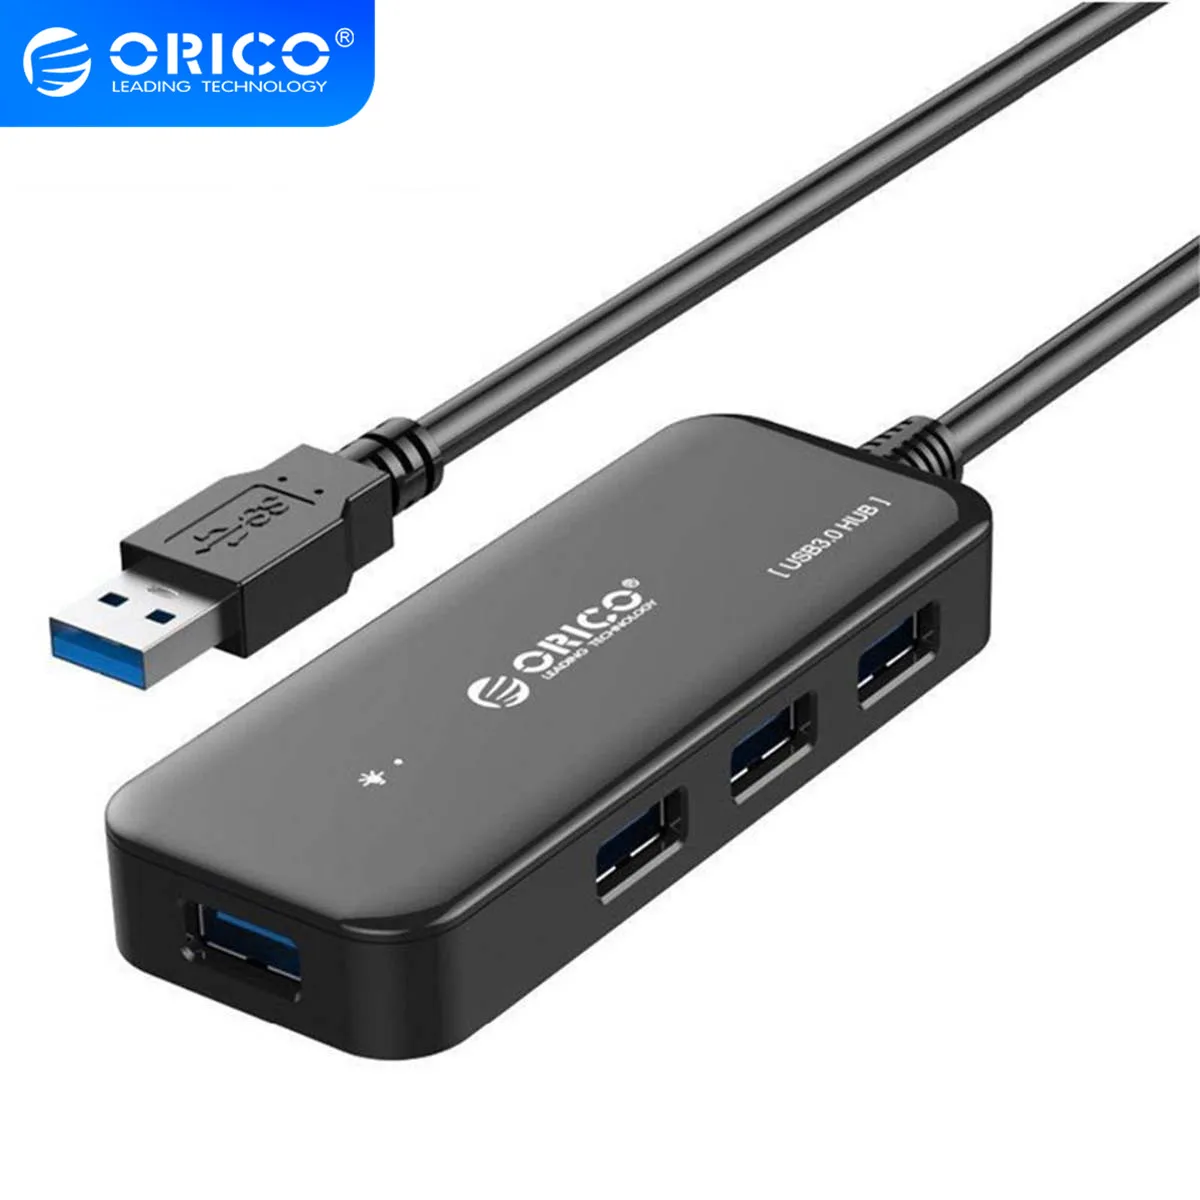 ORICO 4-Port USB 3.0 HUB usb-Splitter Høj Hastighed 5Gbps til Android phone Windows, Linux Bærbar computer Apple Macbook Air PC Tablet